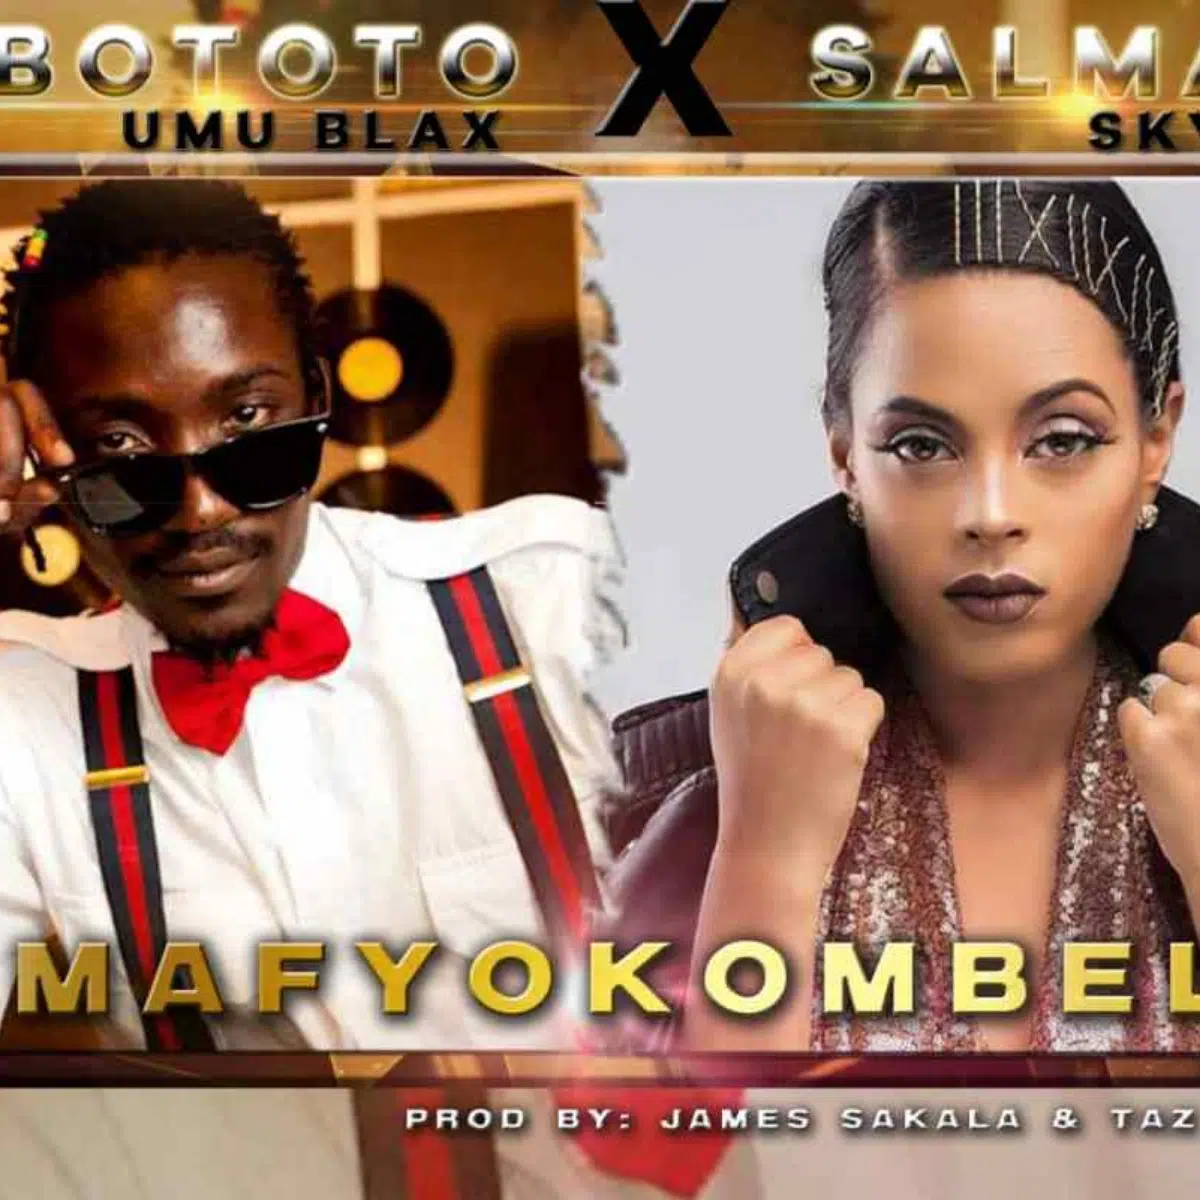 DOWNLOAD: Mbototo Feat Salma Sky – “Amafyokombela” Mp3